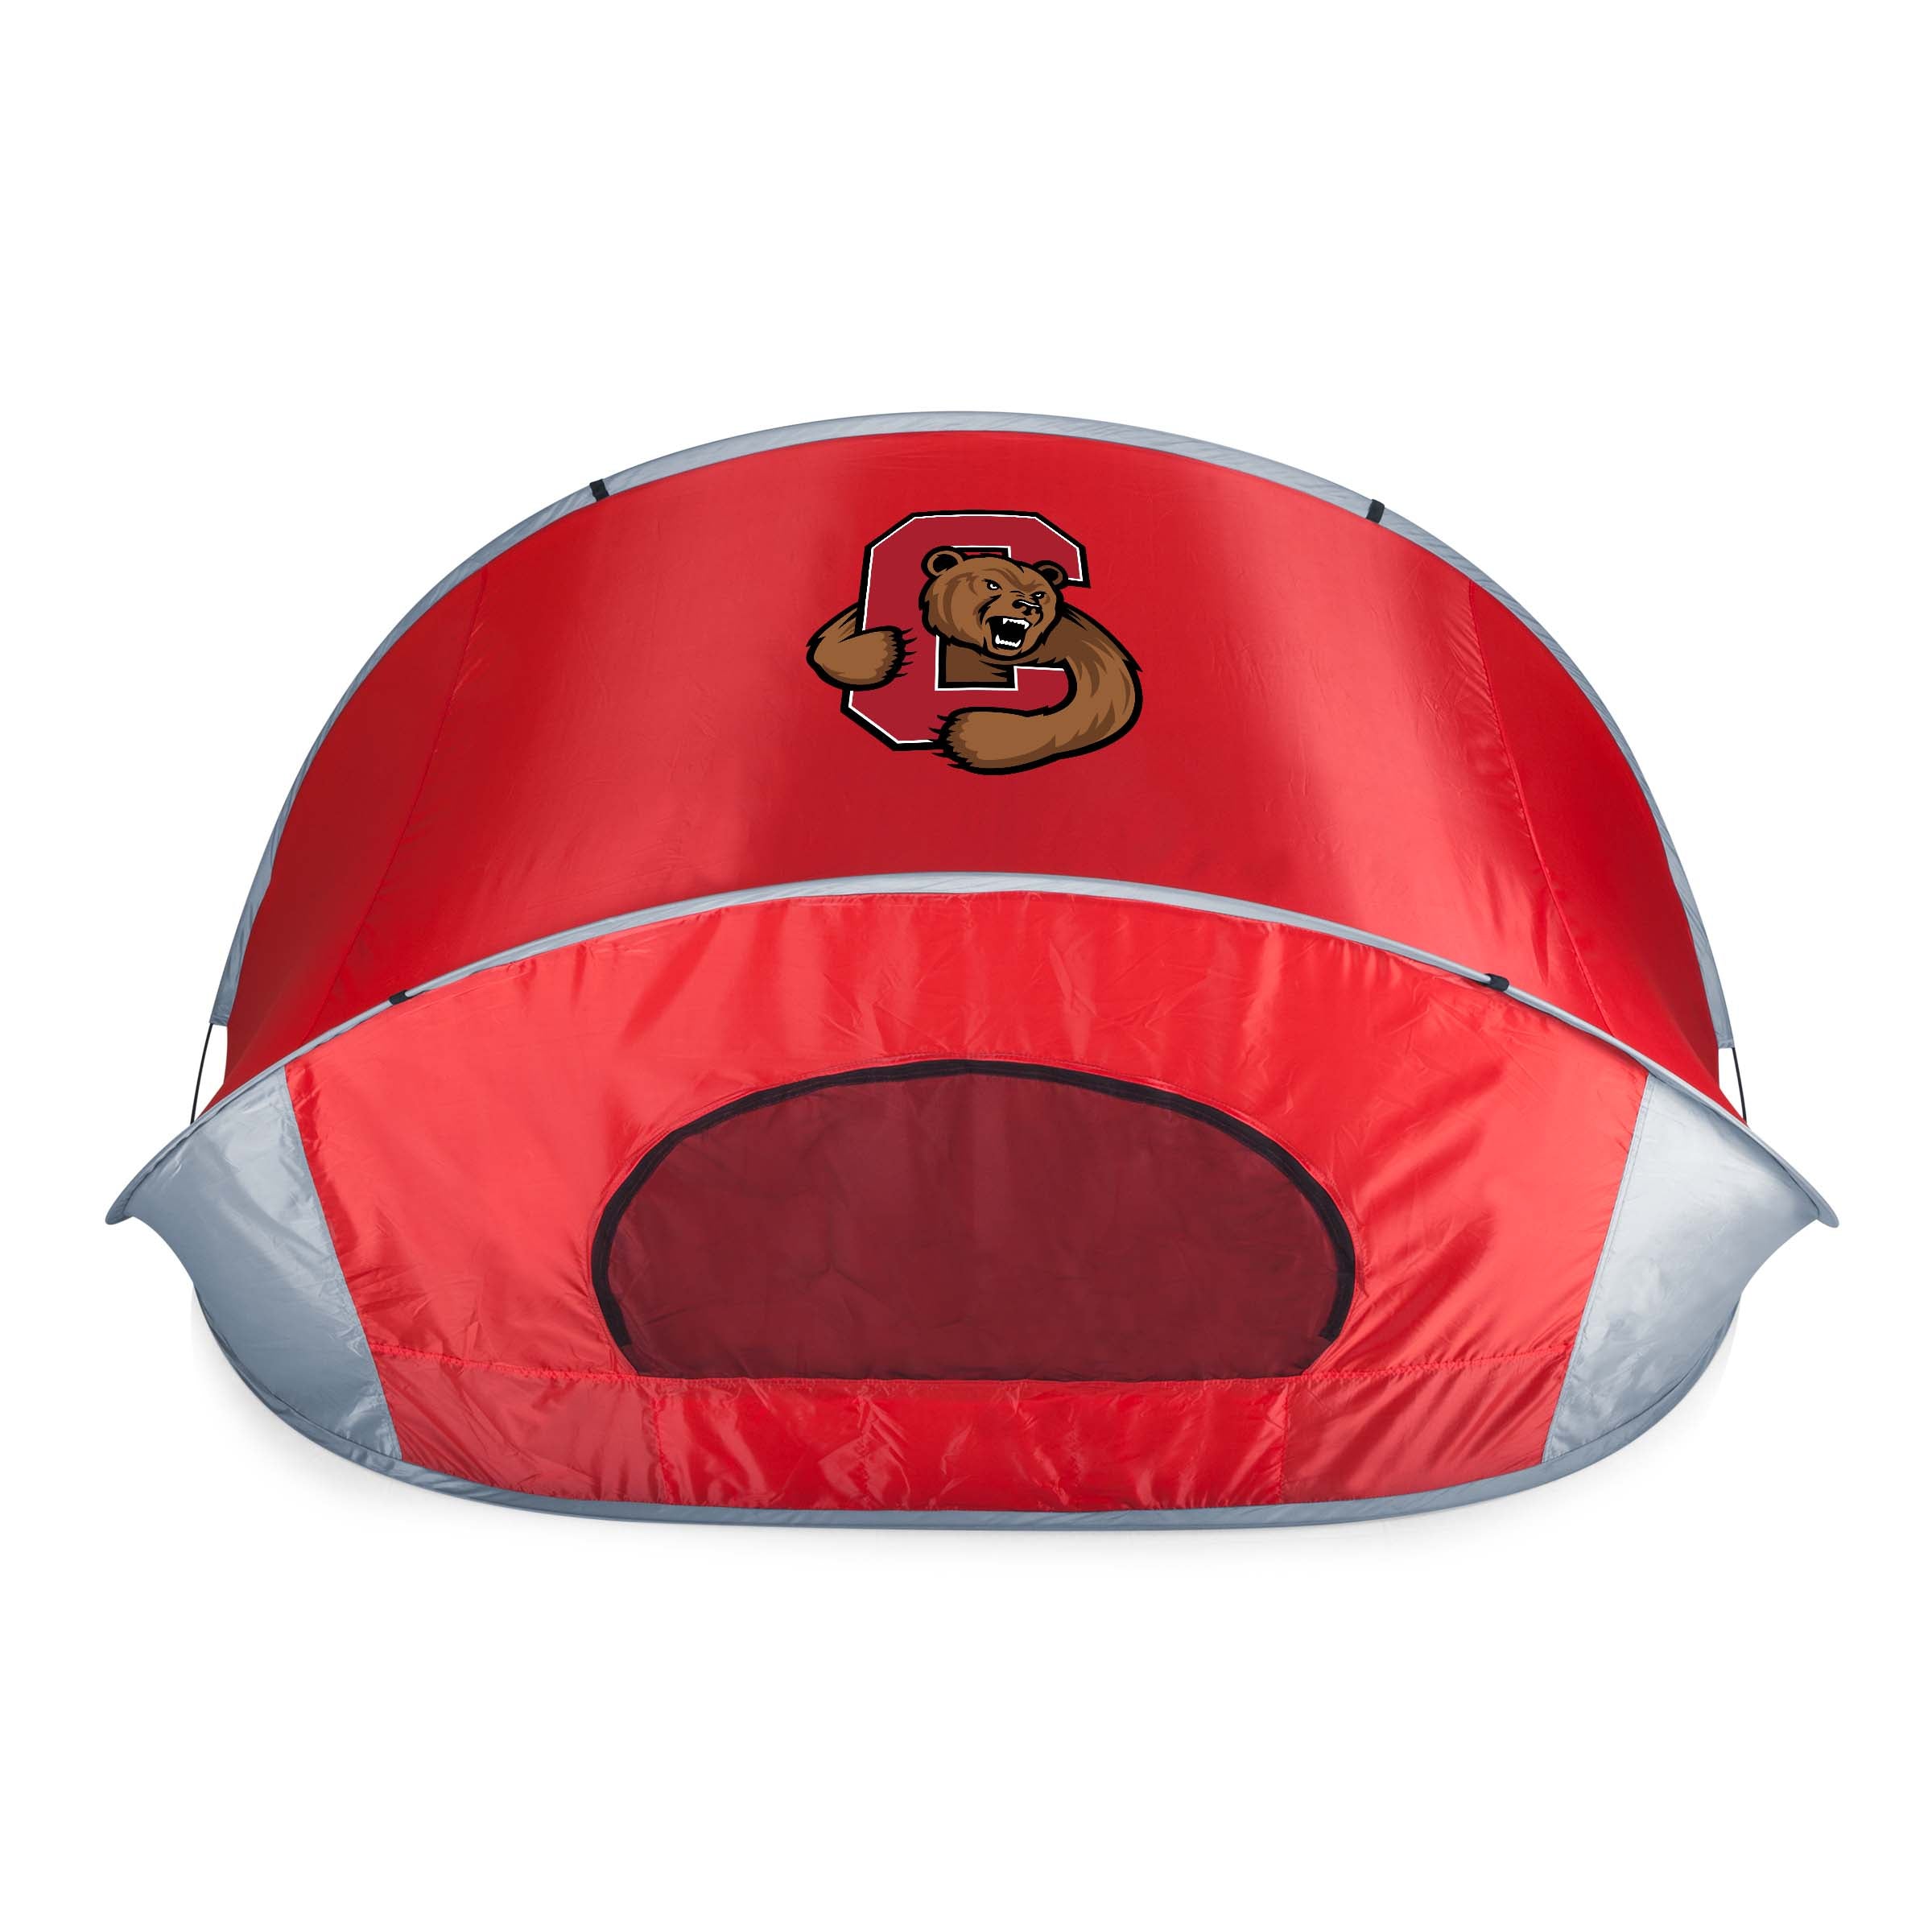 Cornell Big Red - Manta Portable Beach Tent